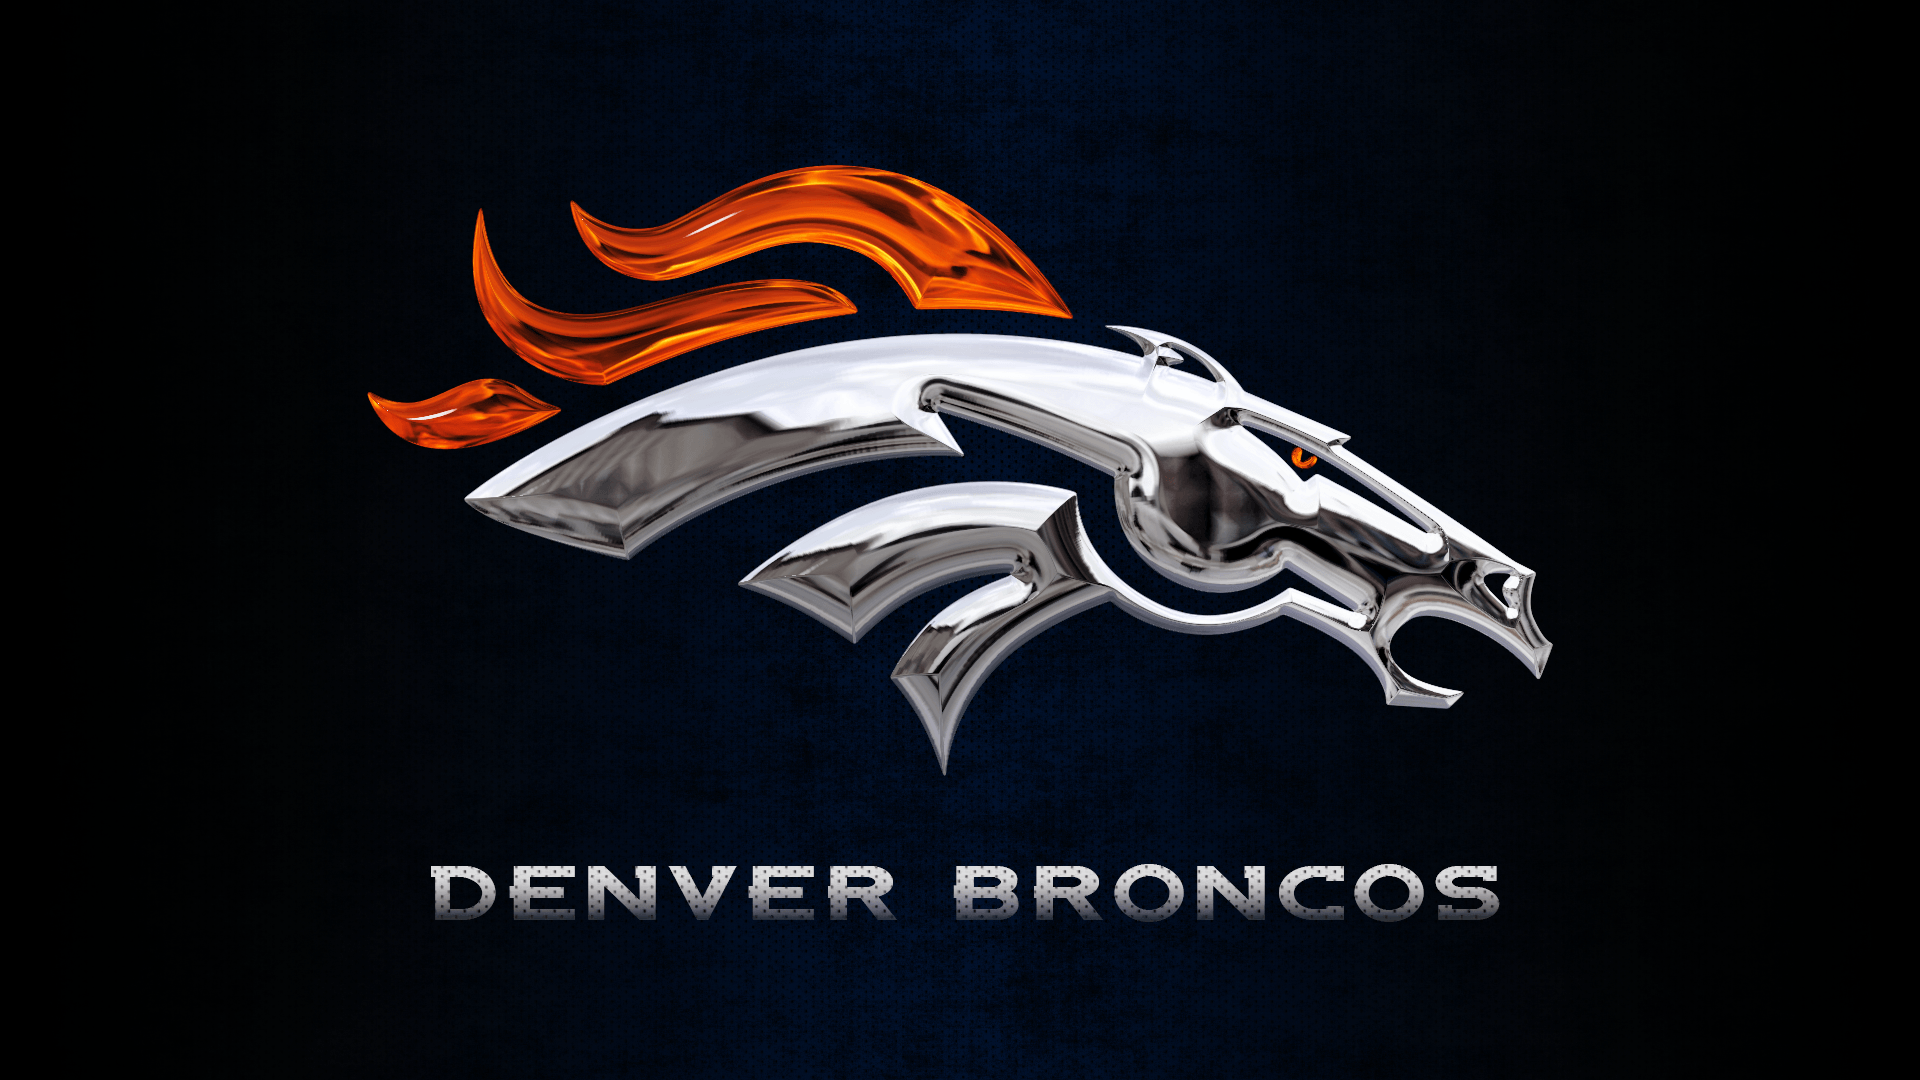 Denver Broncos Image Photo Picture Desktop Pics Of Smartphone HD